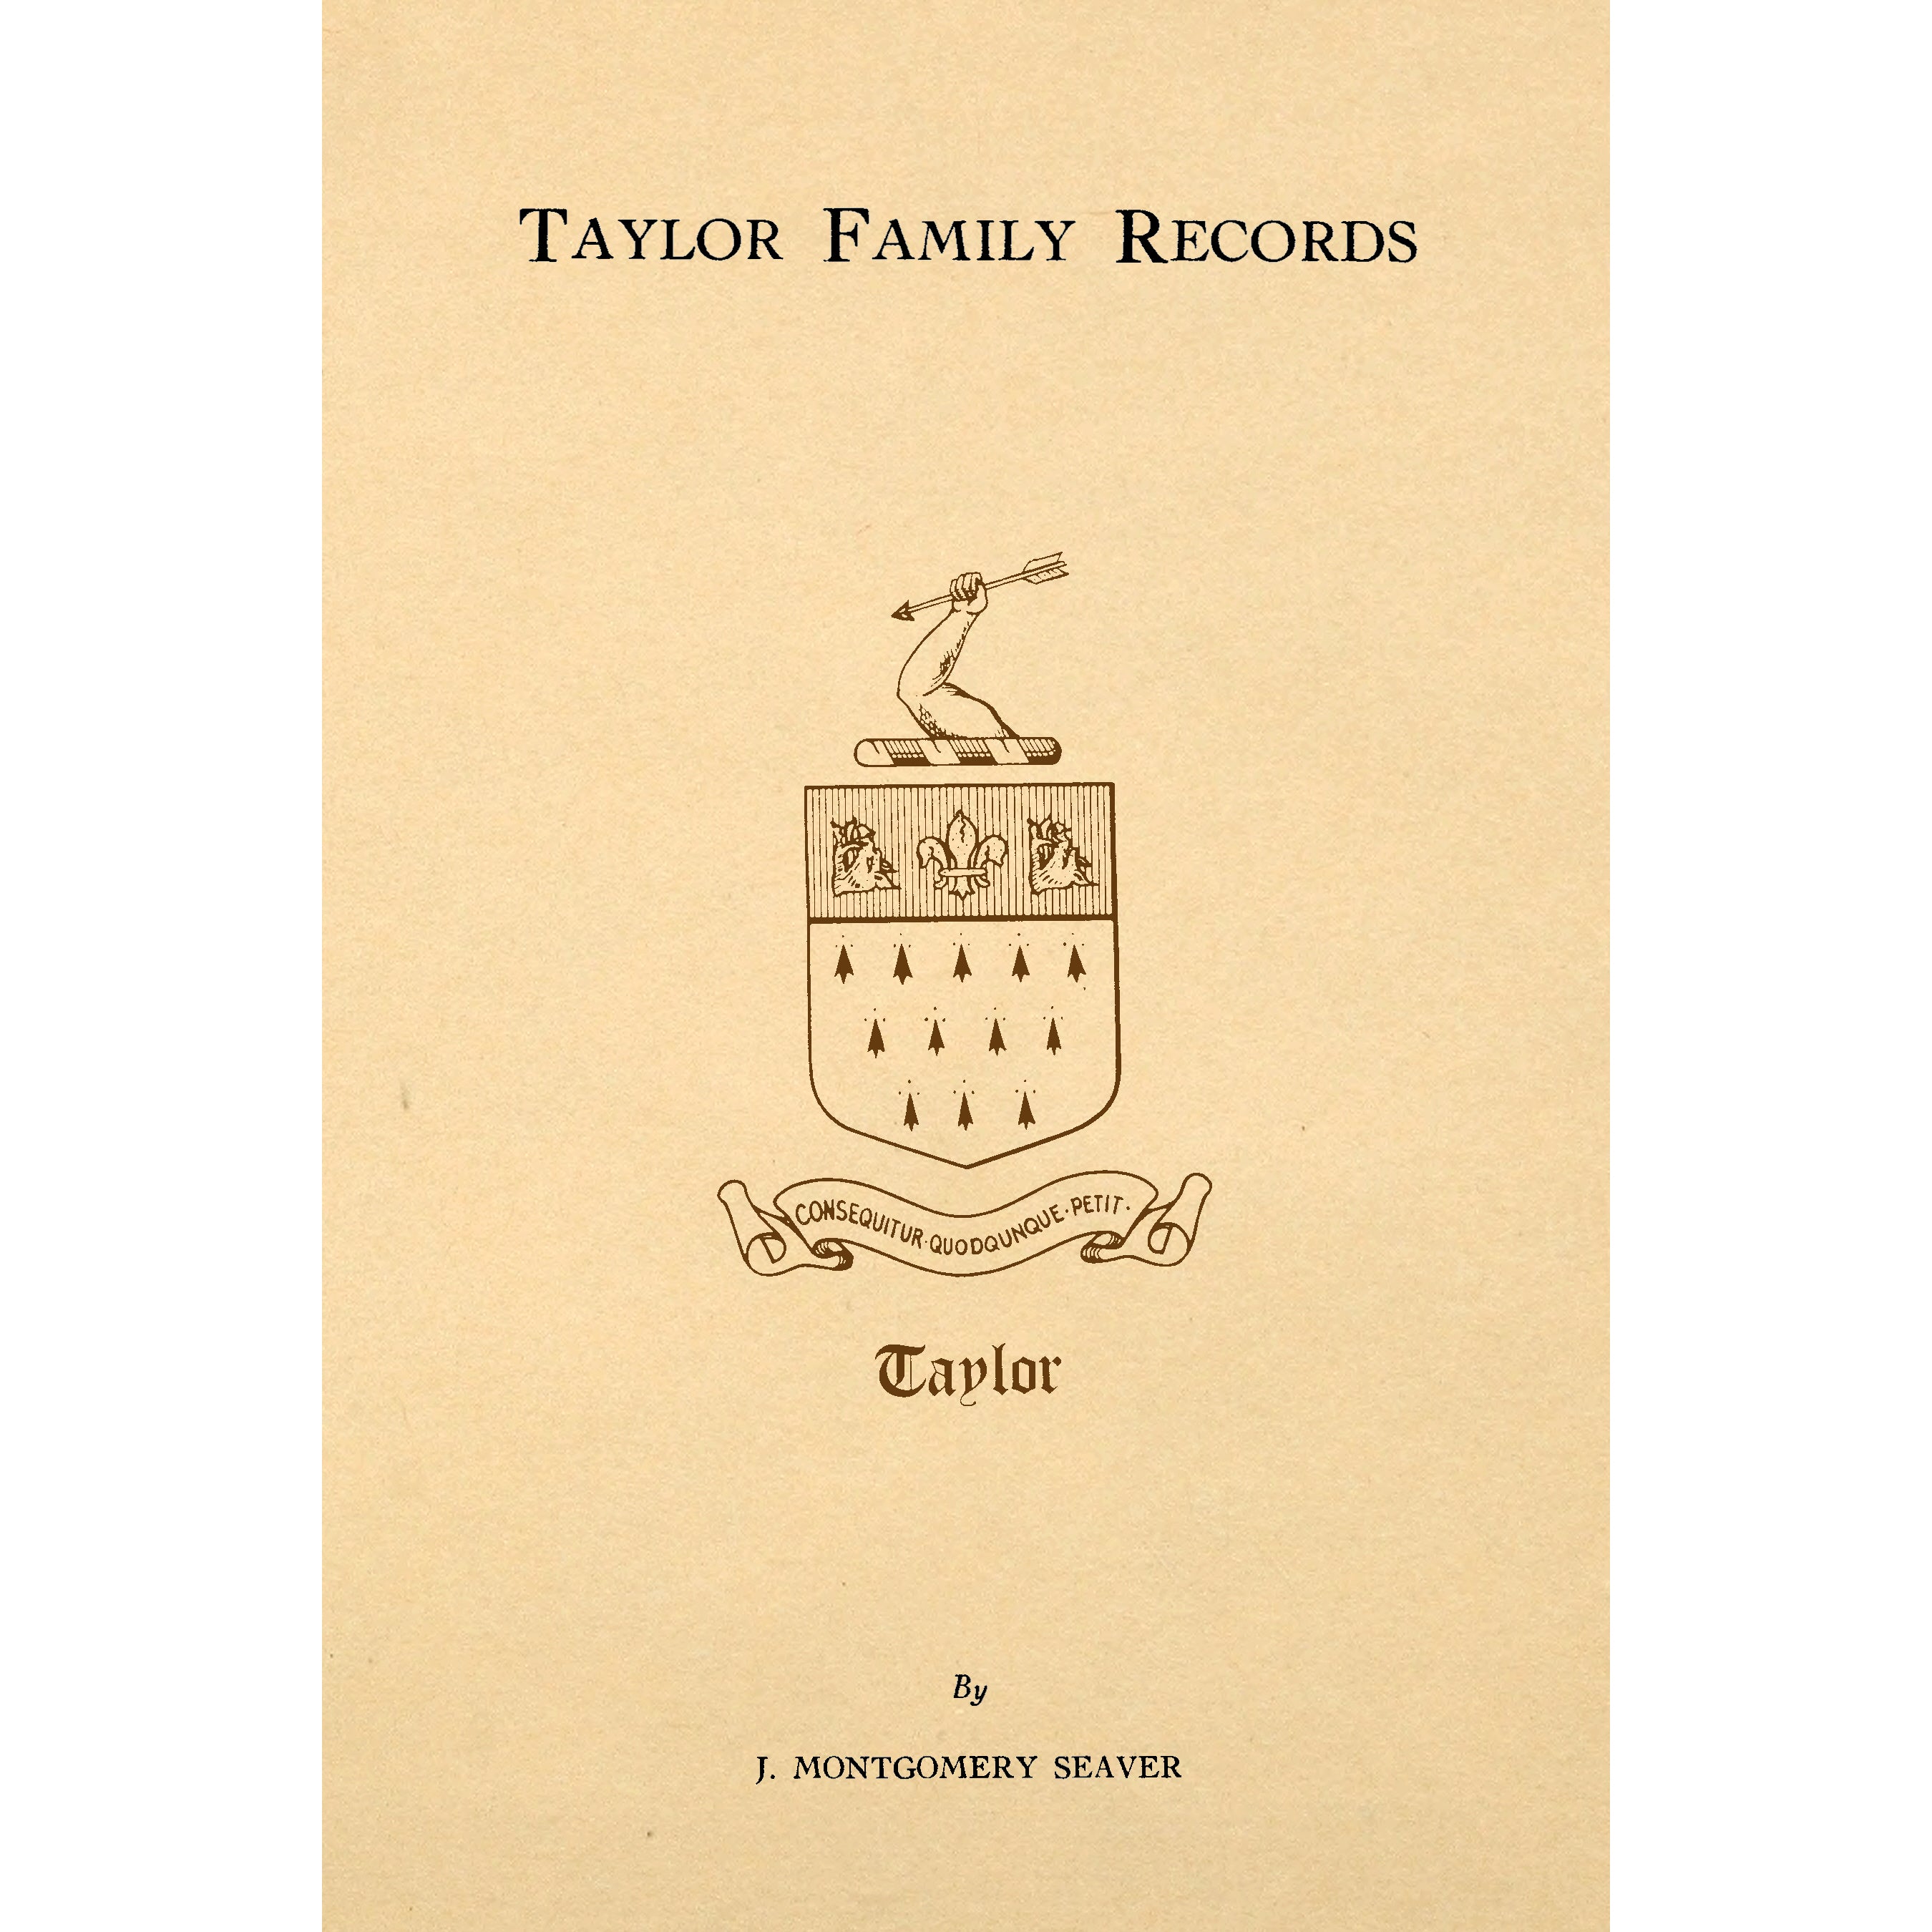 Taylor Family Records